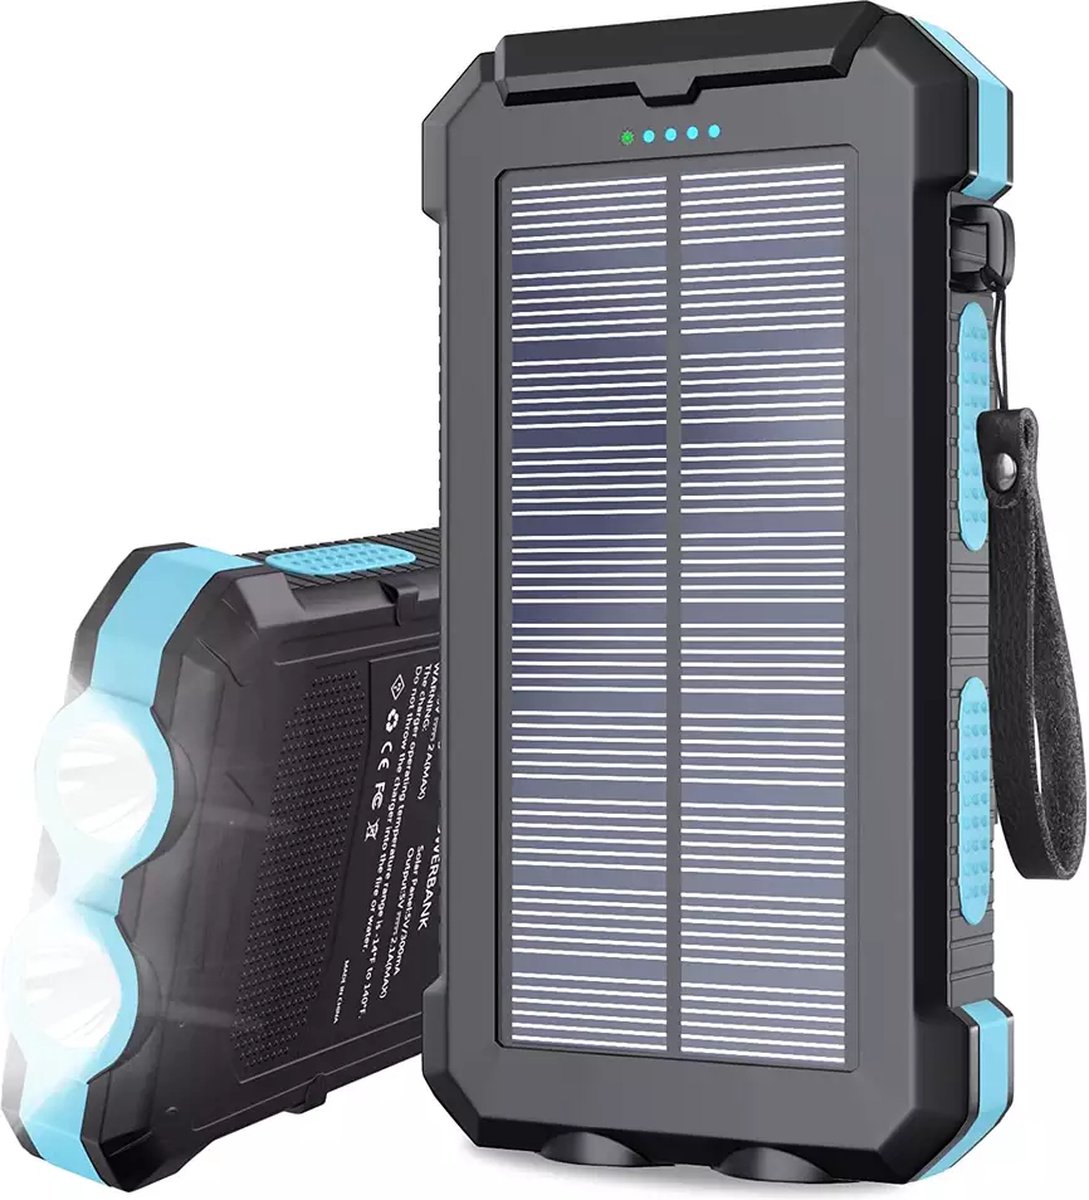 Solar Powerbank 30000mAh - Solar Charger - Waterdicht - iPhone & Samsung - Zonne-energie - Kompas - 2x USB - Micro USB + USB-C - Blauw